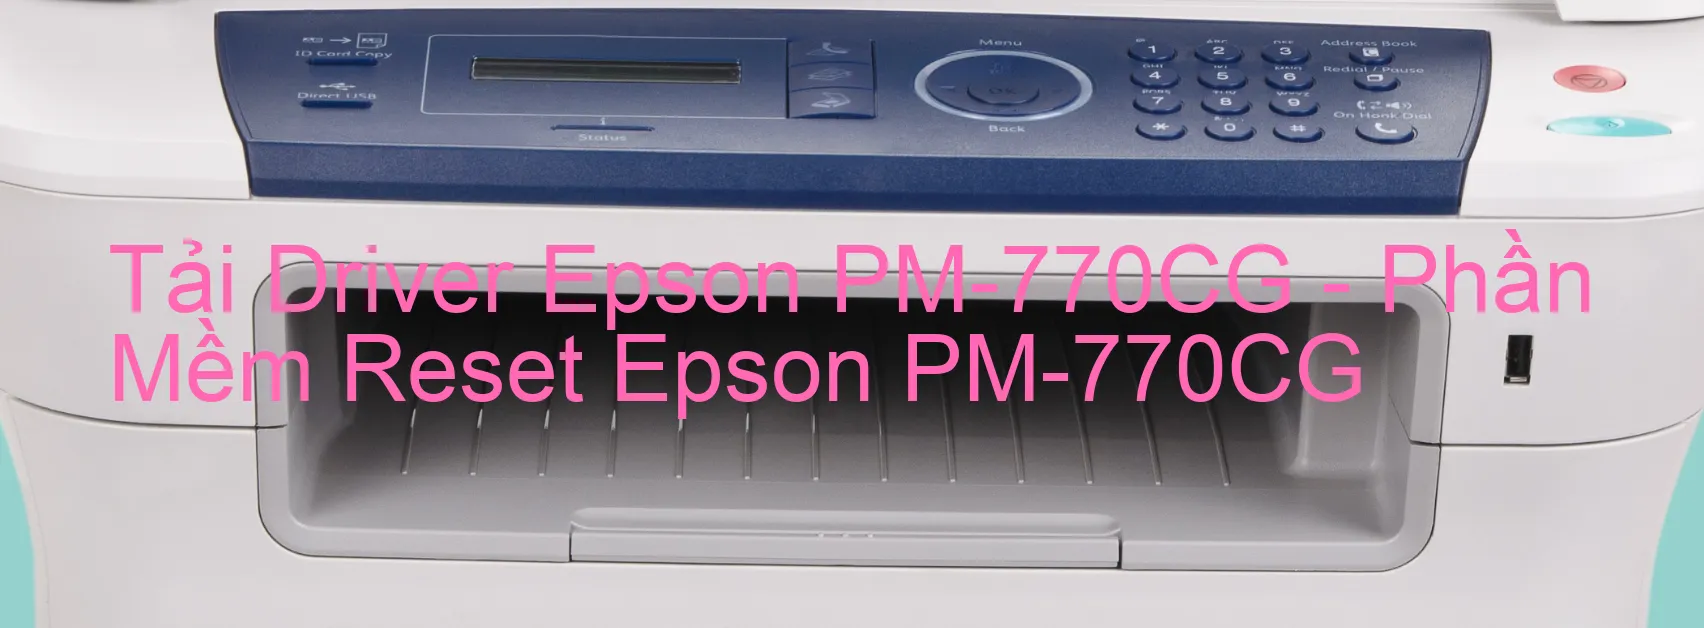 Driver Epson PM-770CG, Phần Mềm Reset Epson PM-770CG